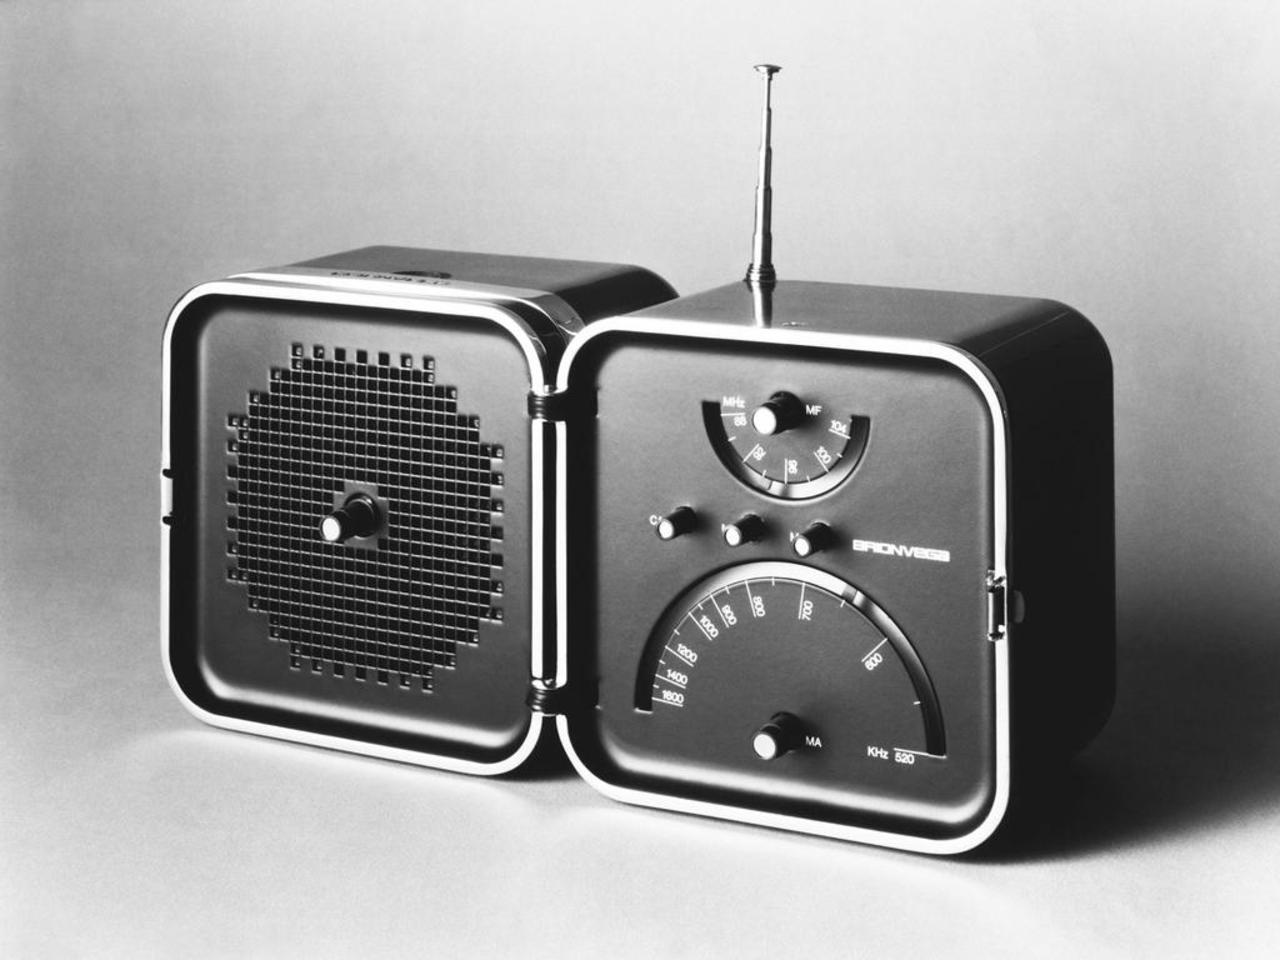 TS 502 Radio Brionvega by Richard Sapper